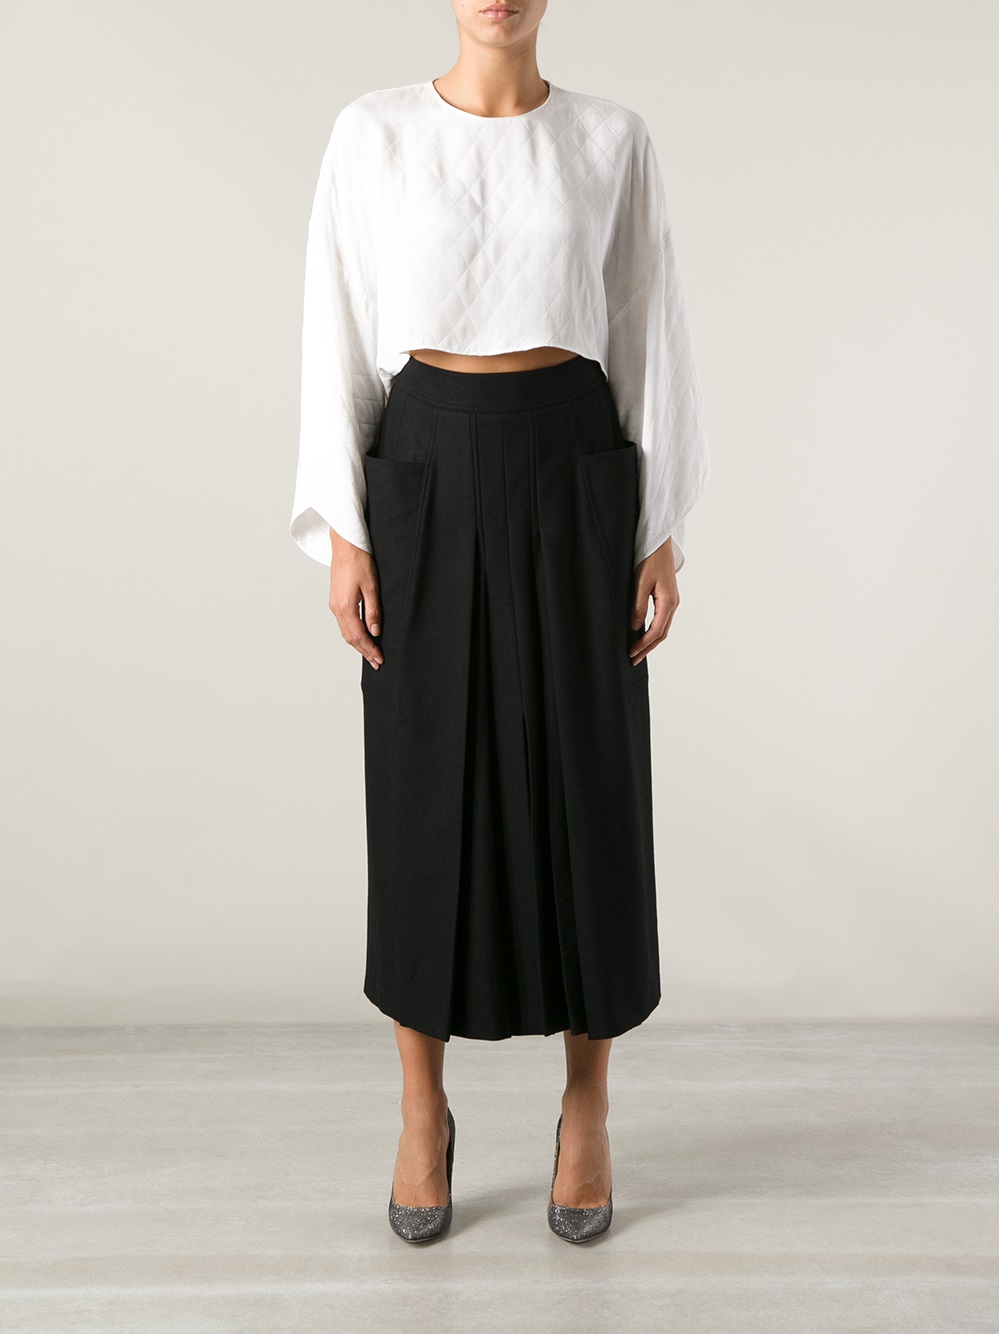 Antonio Marras Pleated Midi Skirt in Black - Lyst